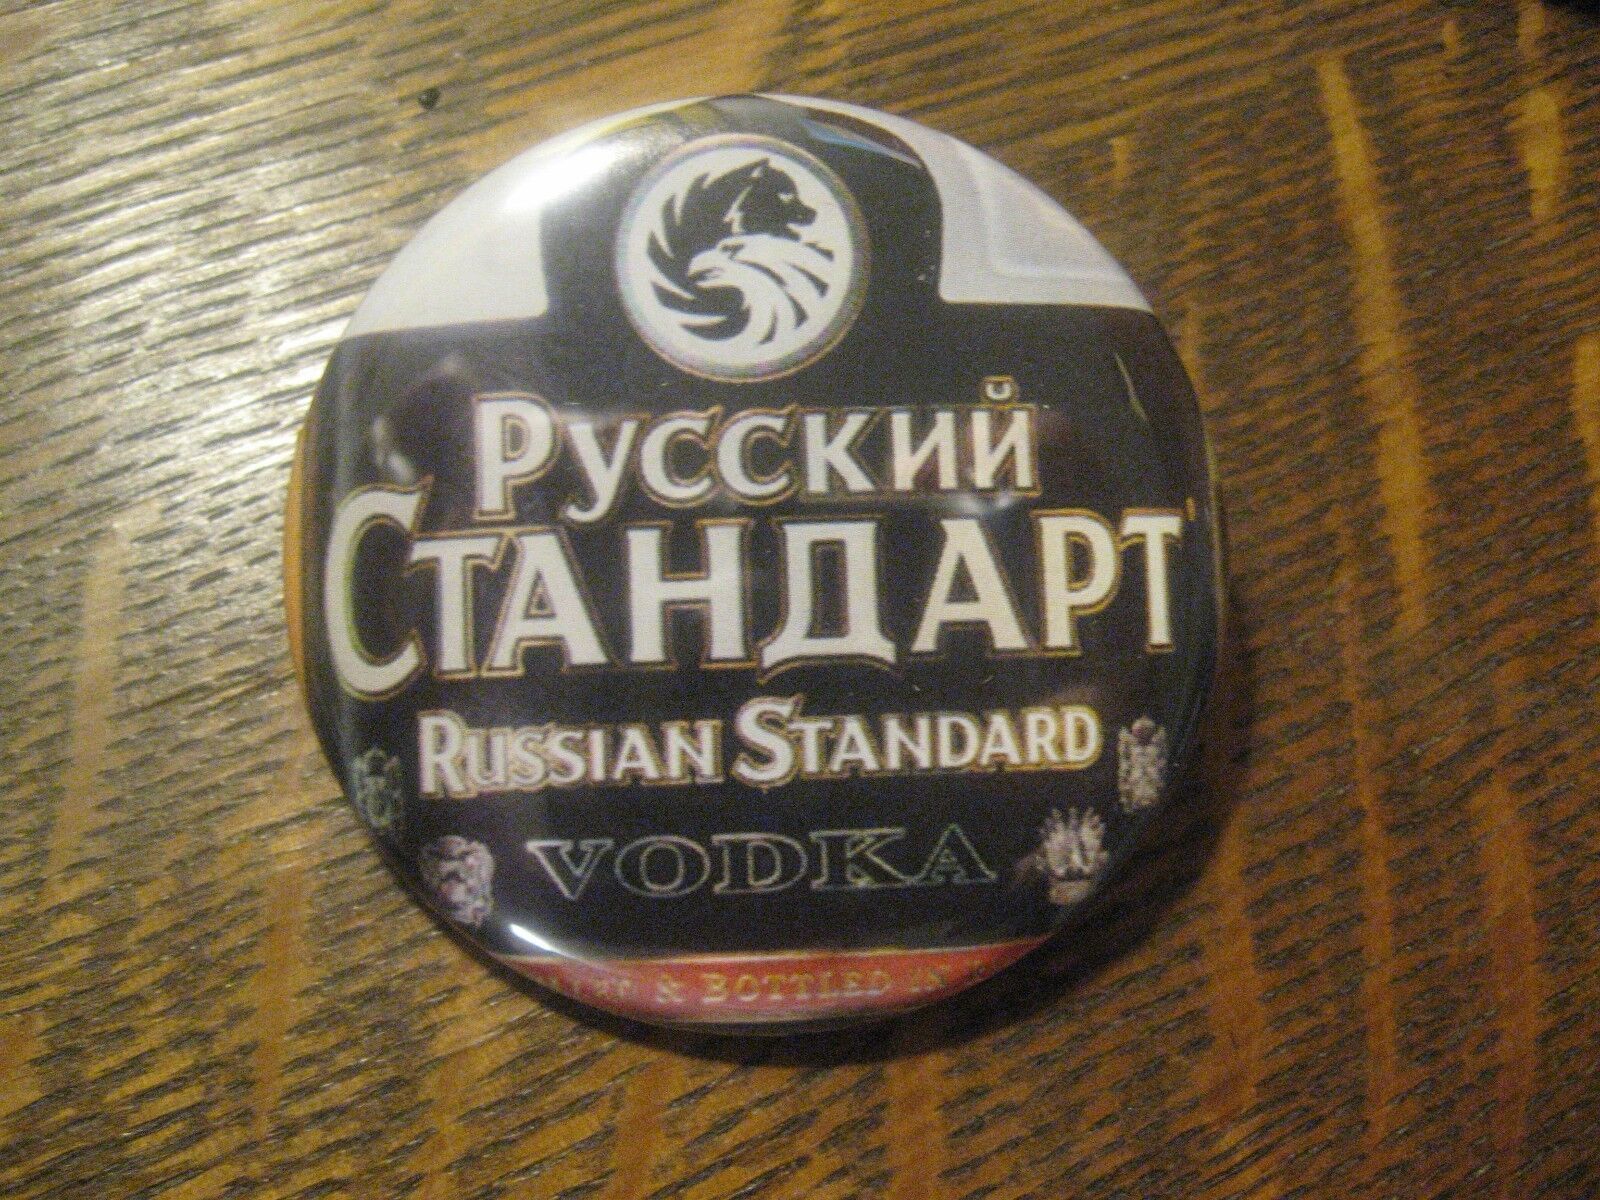 Russian Standard Vodka Original Liquor Label Advertisement Pocket Mirror $20